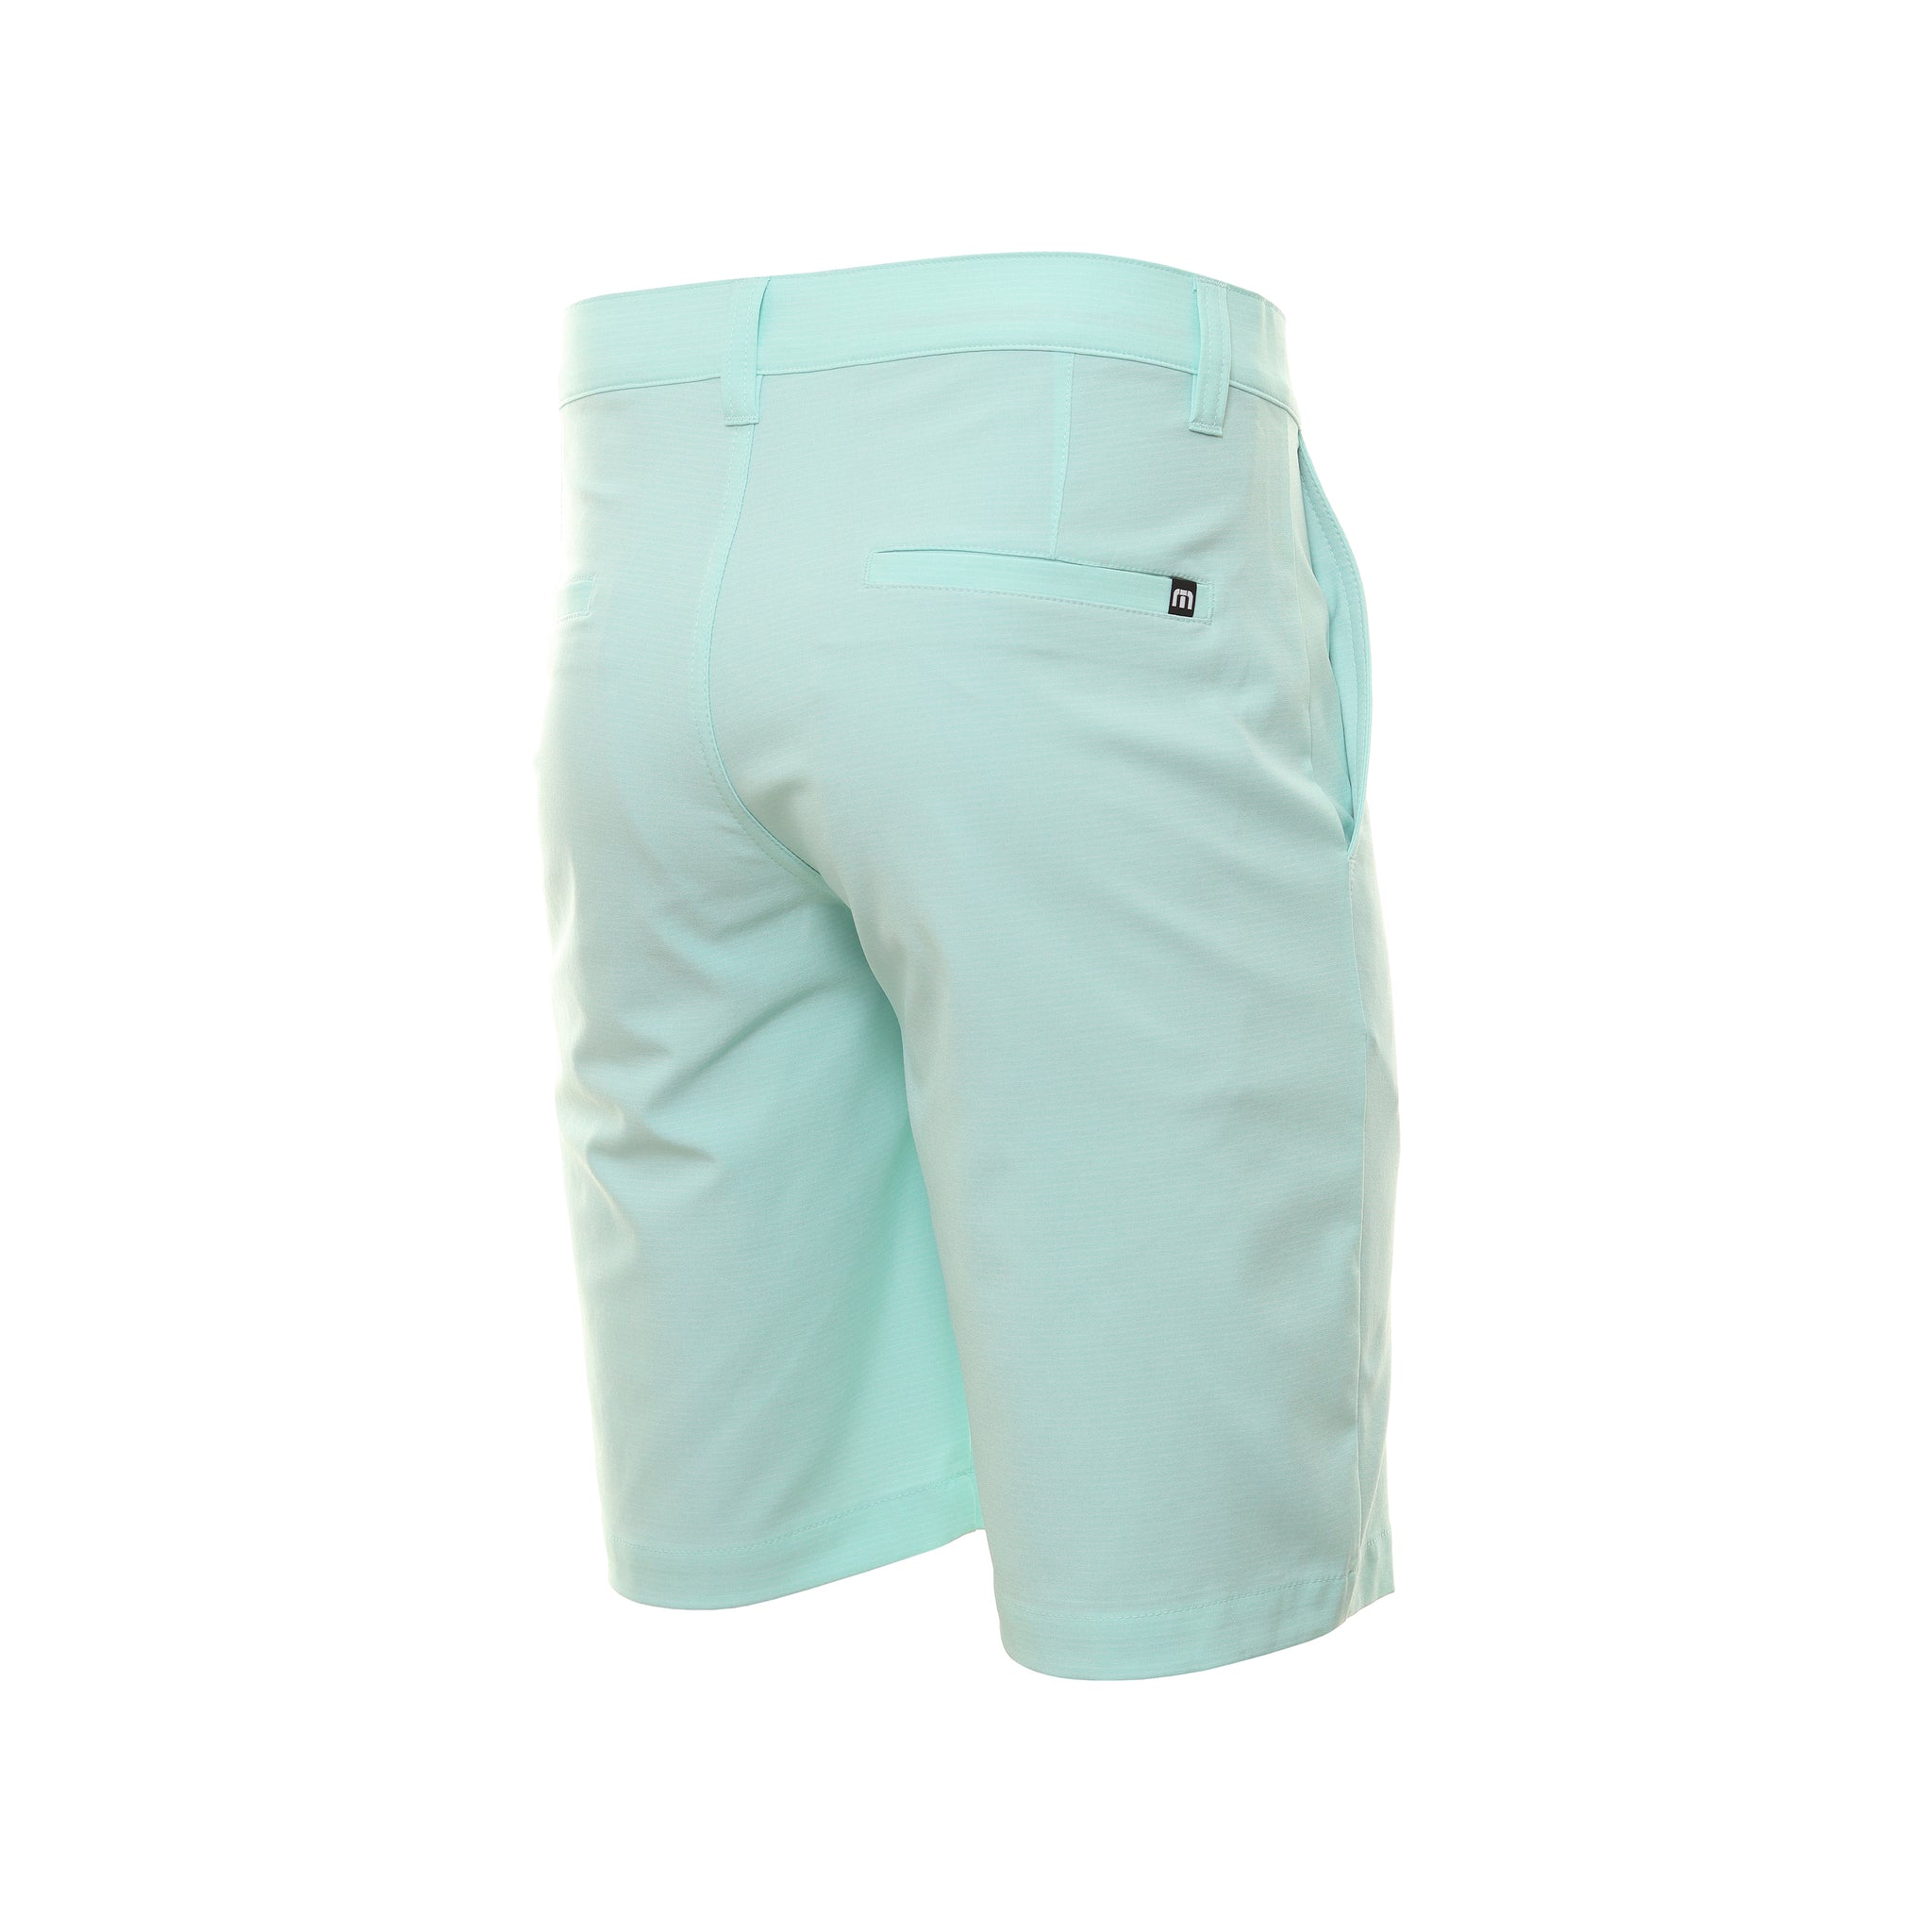 travismathew-sand-harbour-shorts-1mw397-heather-turquoise